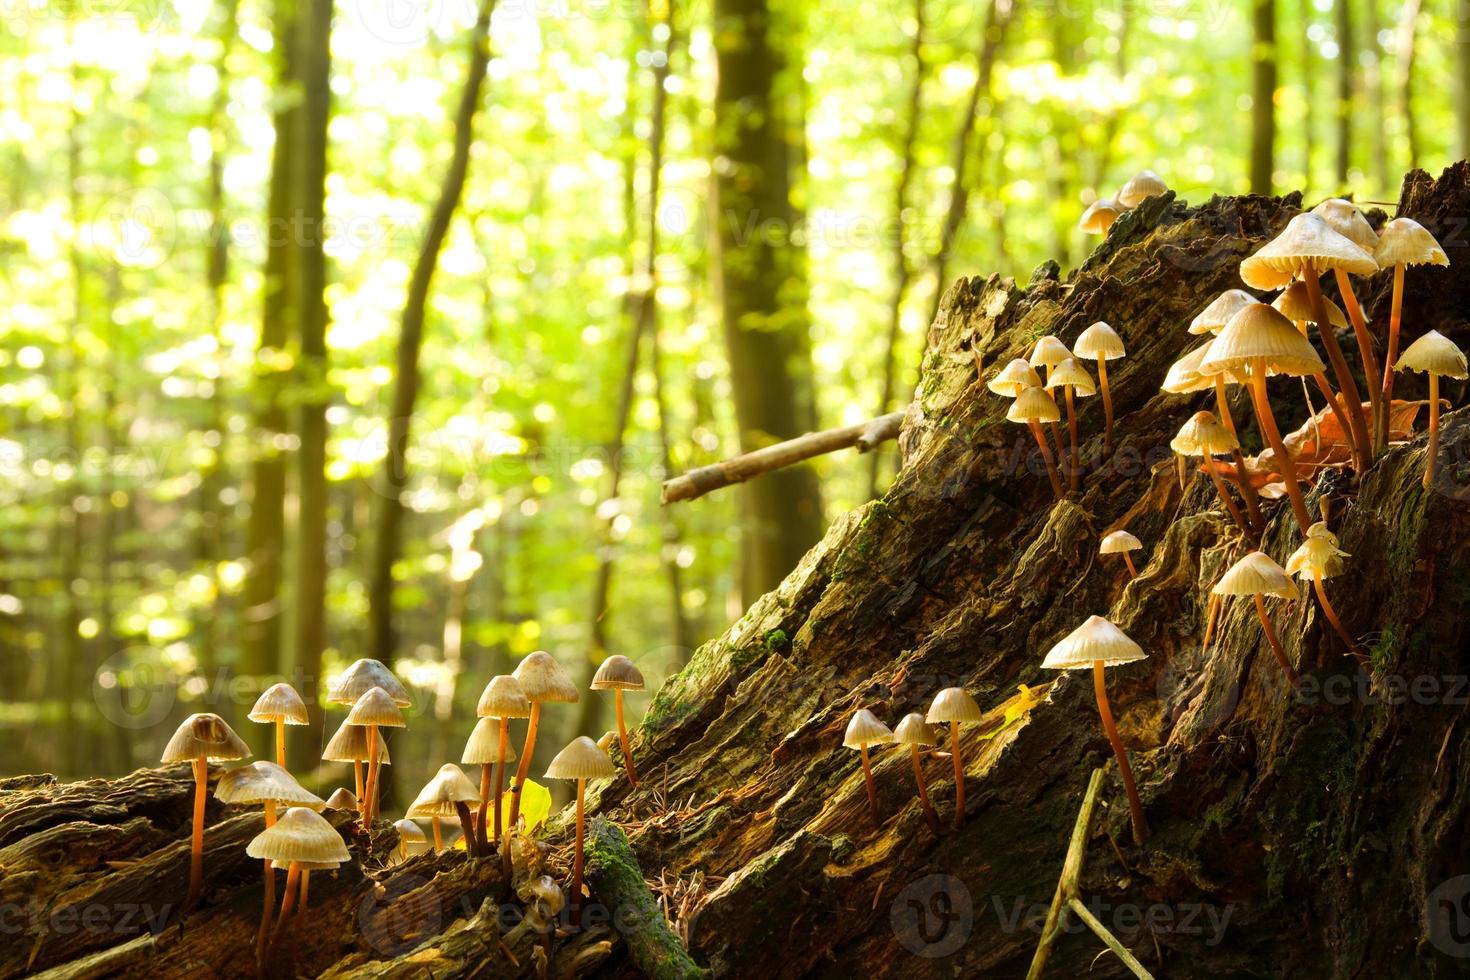 Forest fungi photo